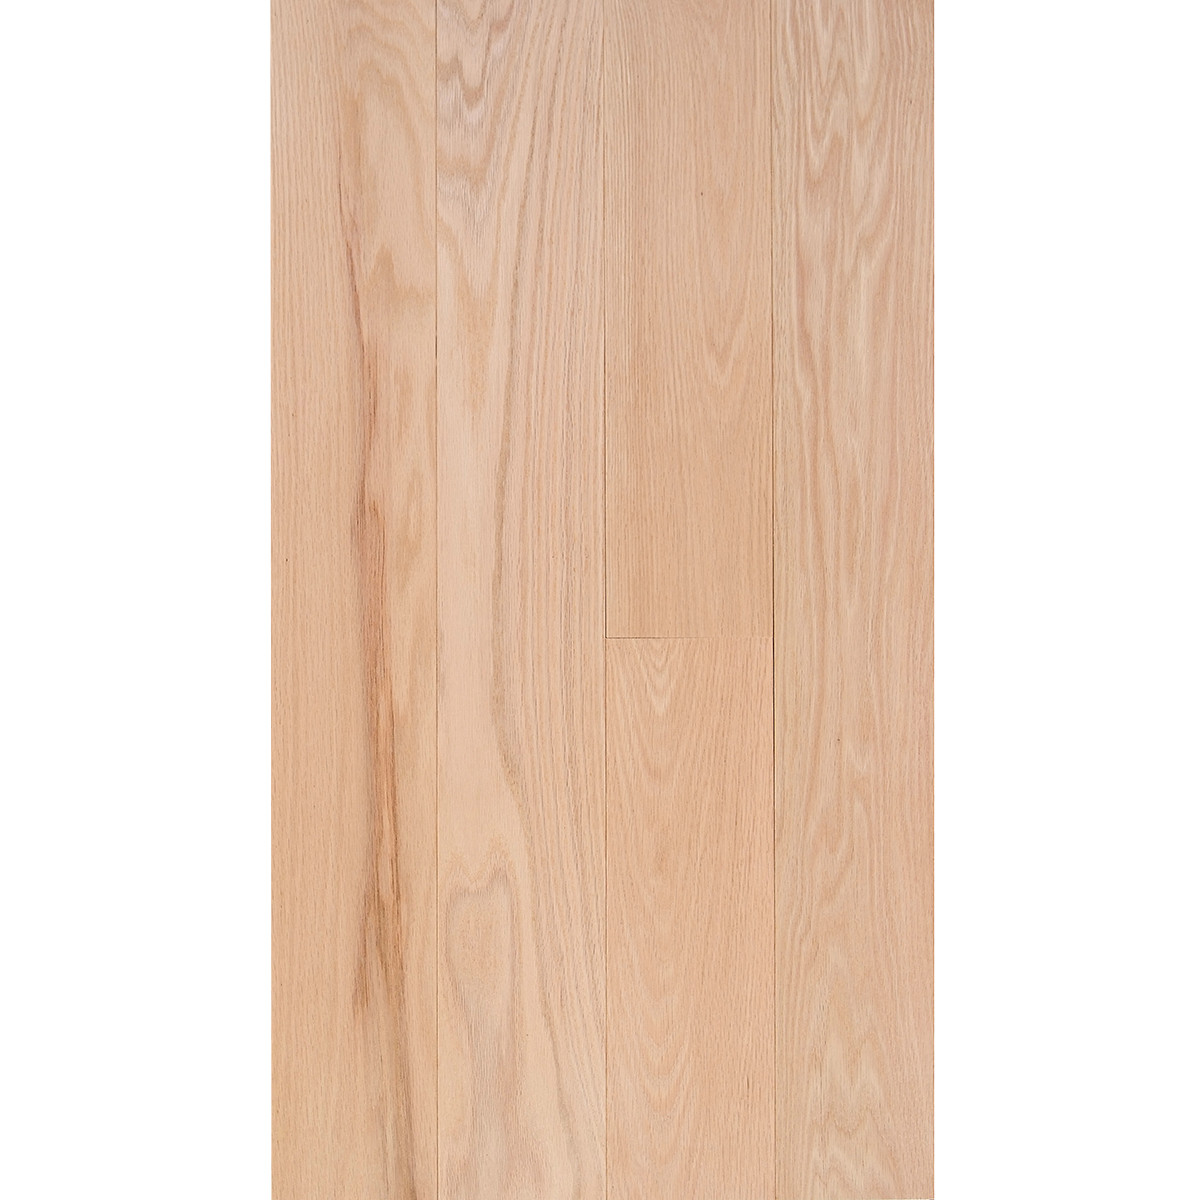 Prefinished Hardwood Flooring Ratings Of Red Oak 3 4 X 5 Select Grade Flooring Regarding Fs 5 Redoak Select Em Flooring